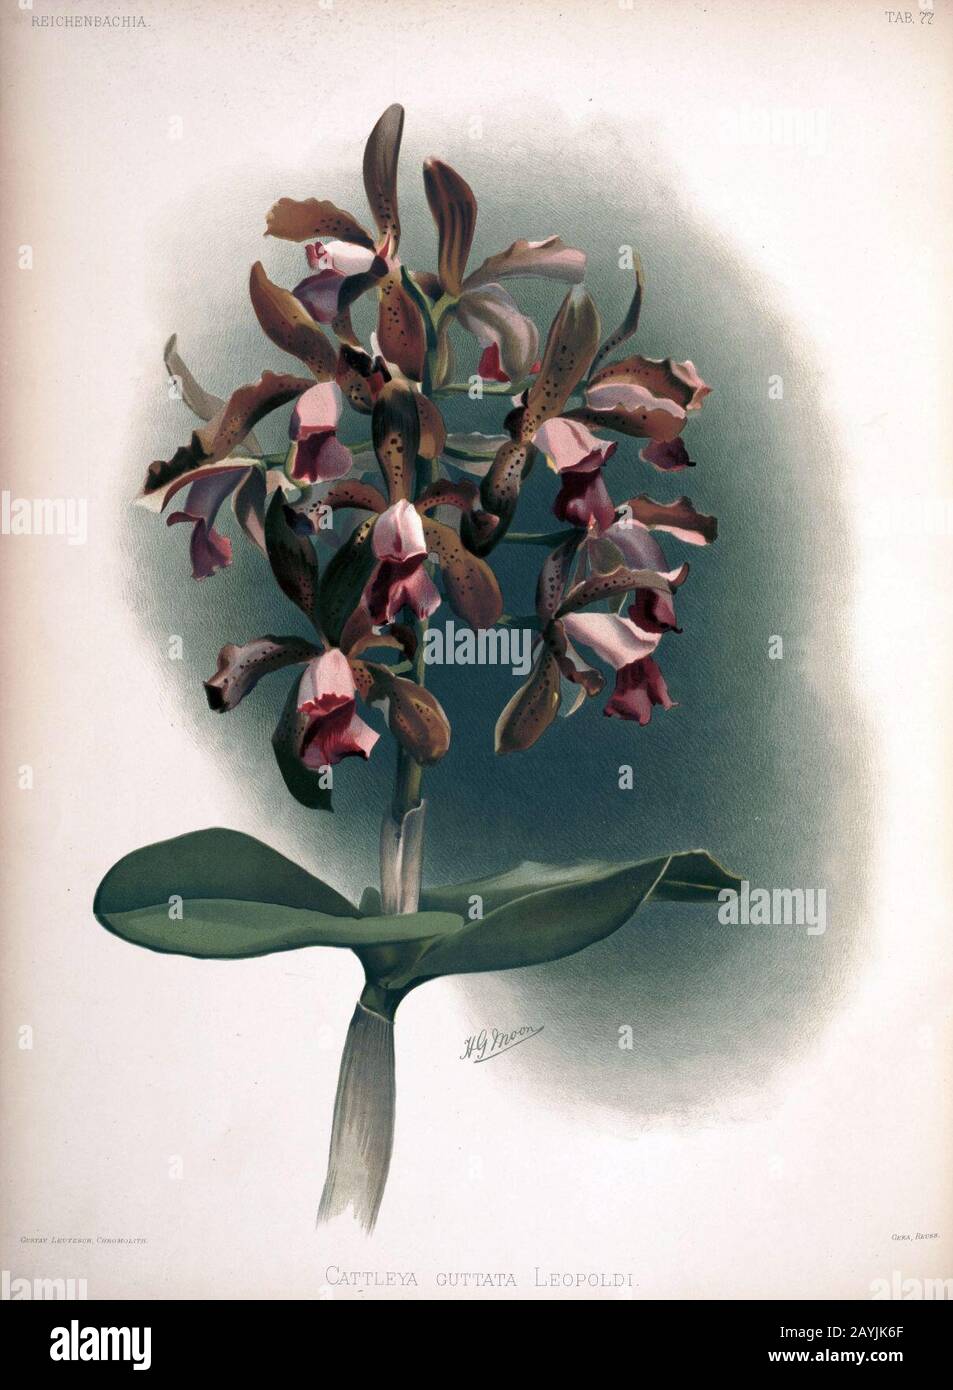 Frederick Sander - Reichenbachia II plate 77 (1890) - Cattleya guttata leopoldi. Stock Photo